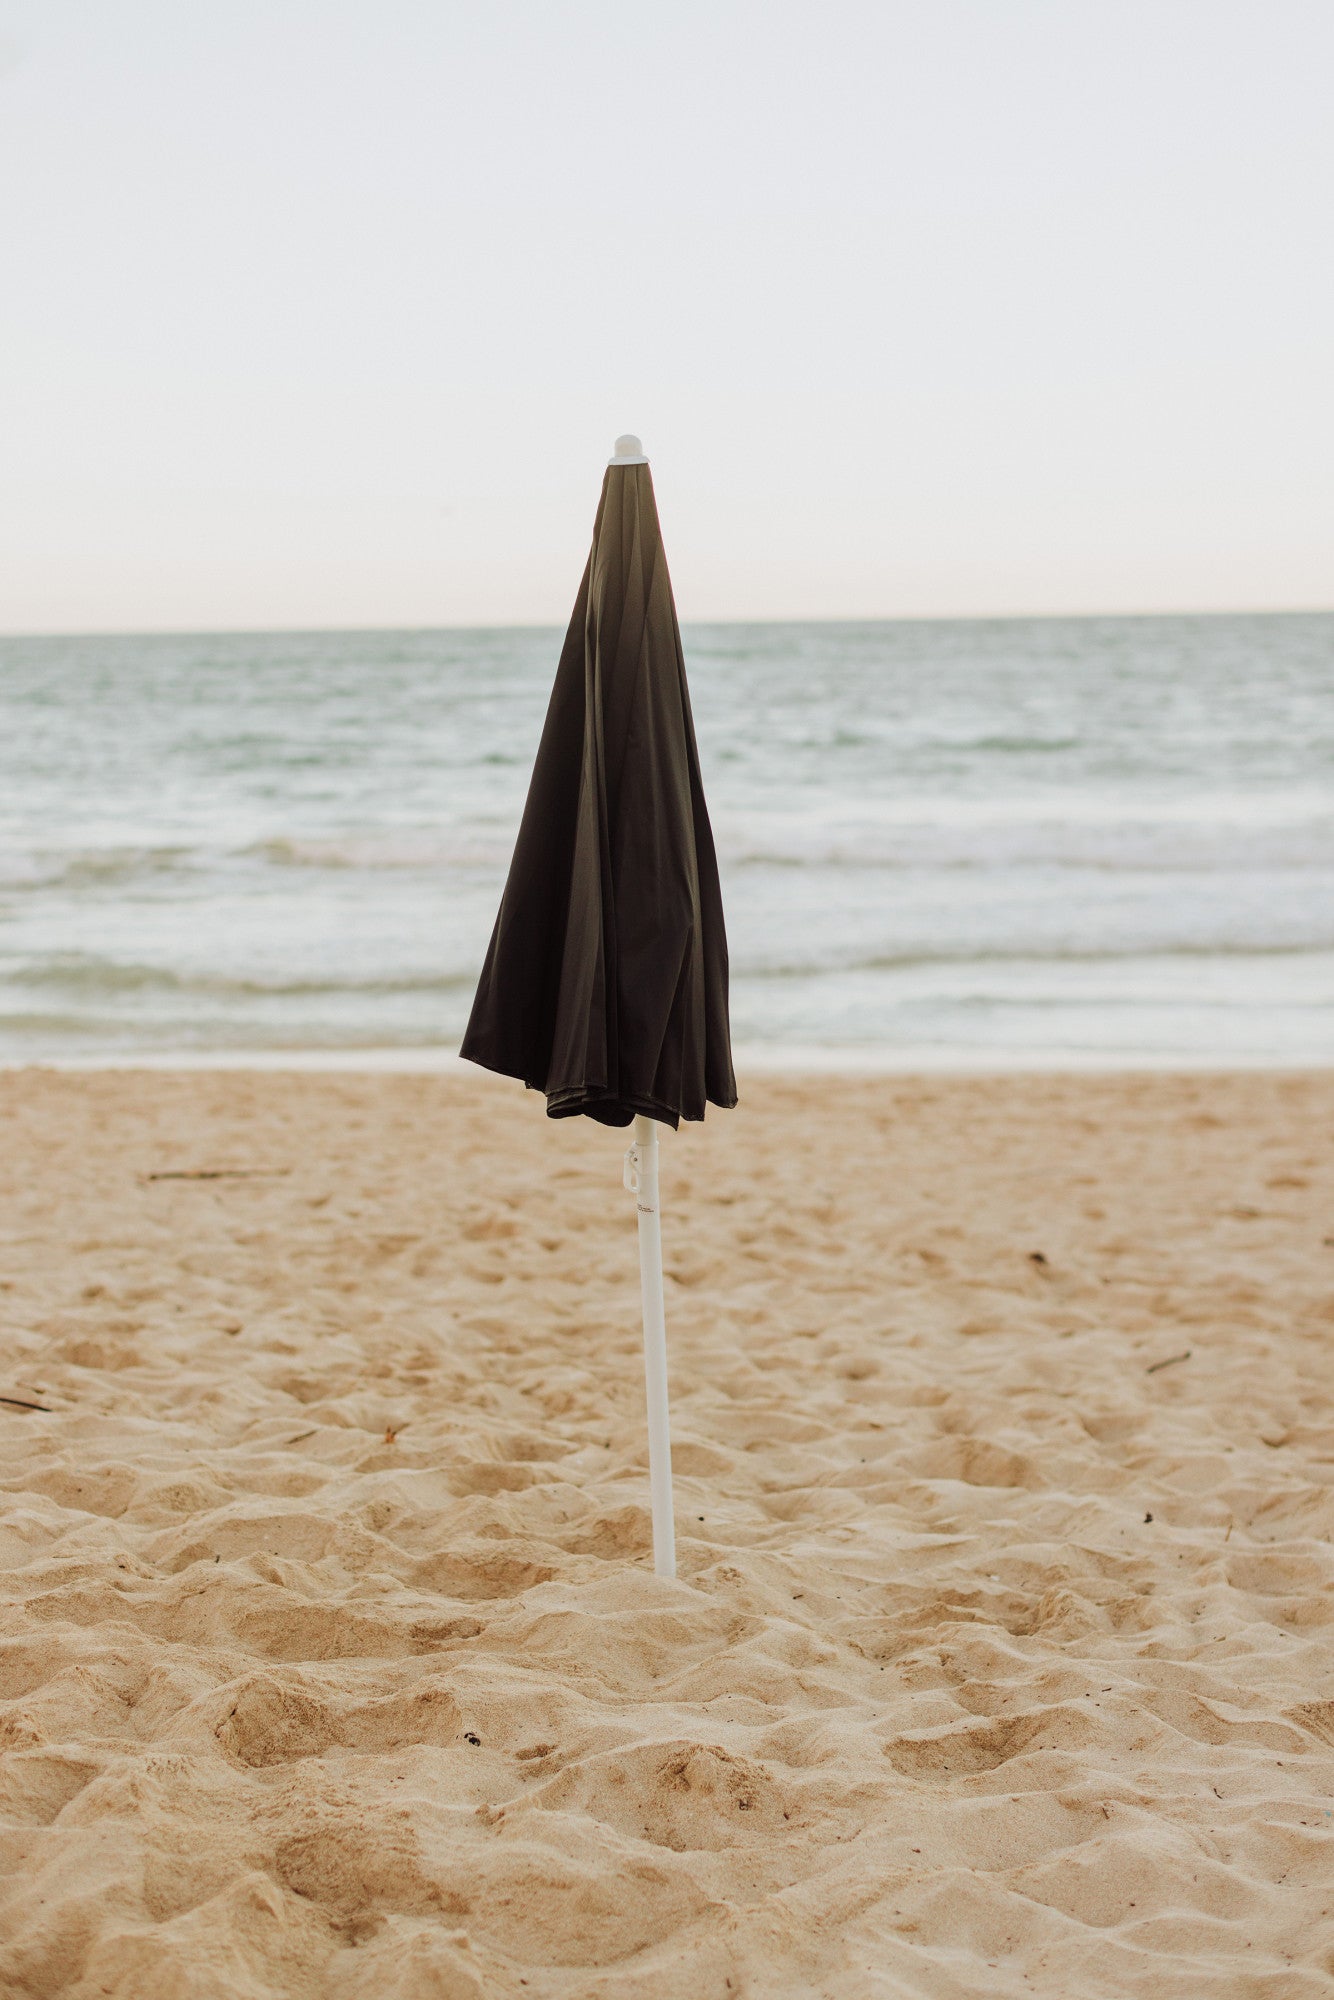 Washington Huskies - 5.5 Ft. Portable Beach Umbrella